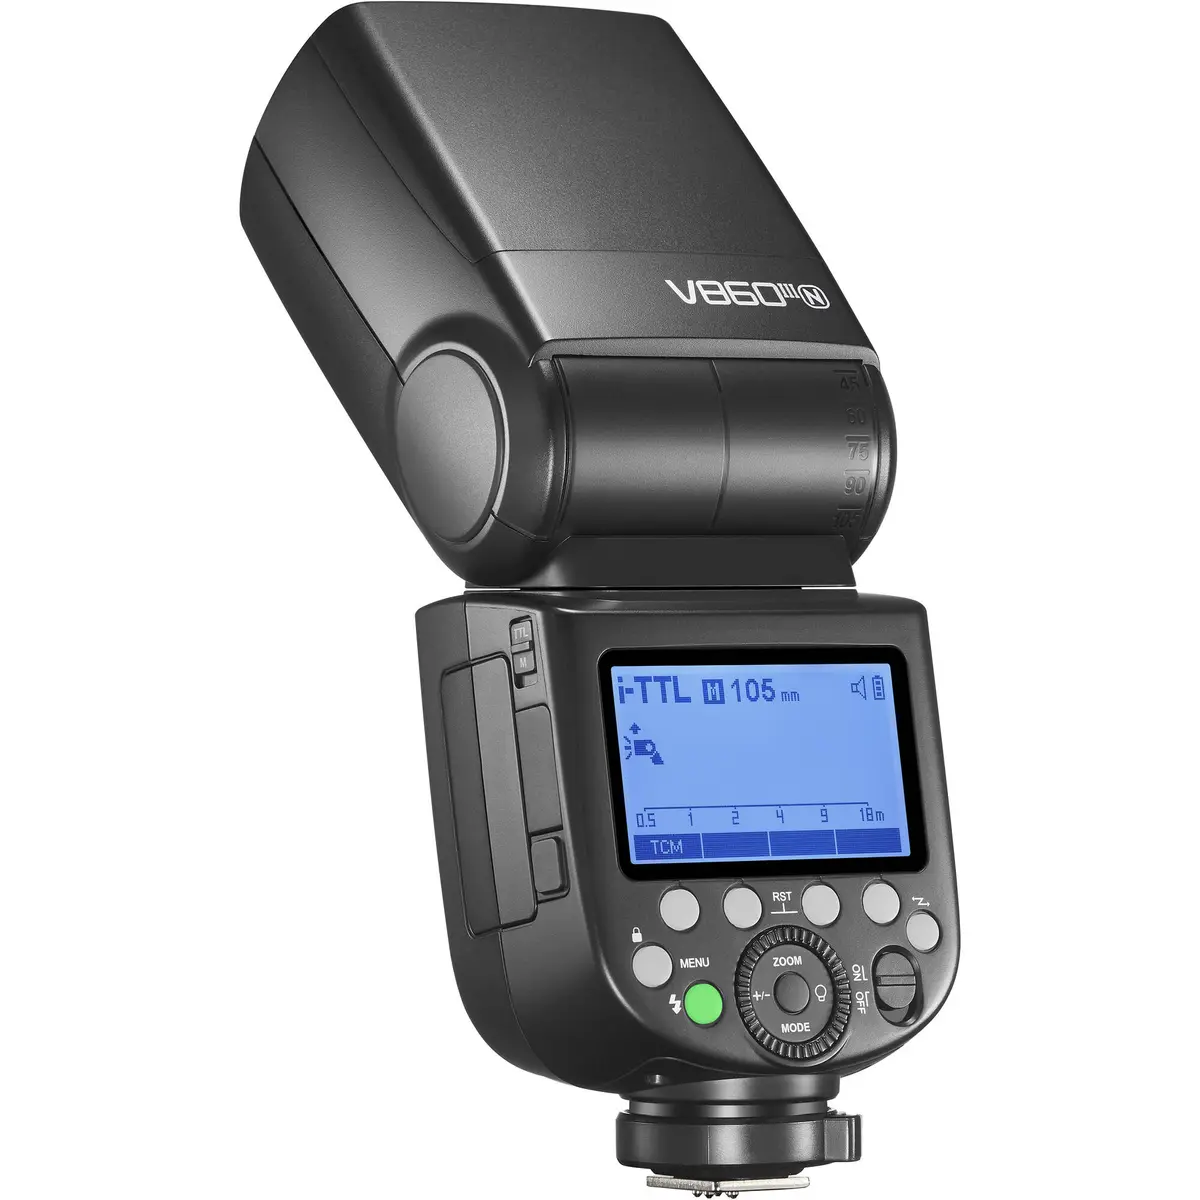 3. Godox V860III-N VING TTL Camera Flash (Nikon)